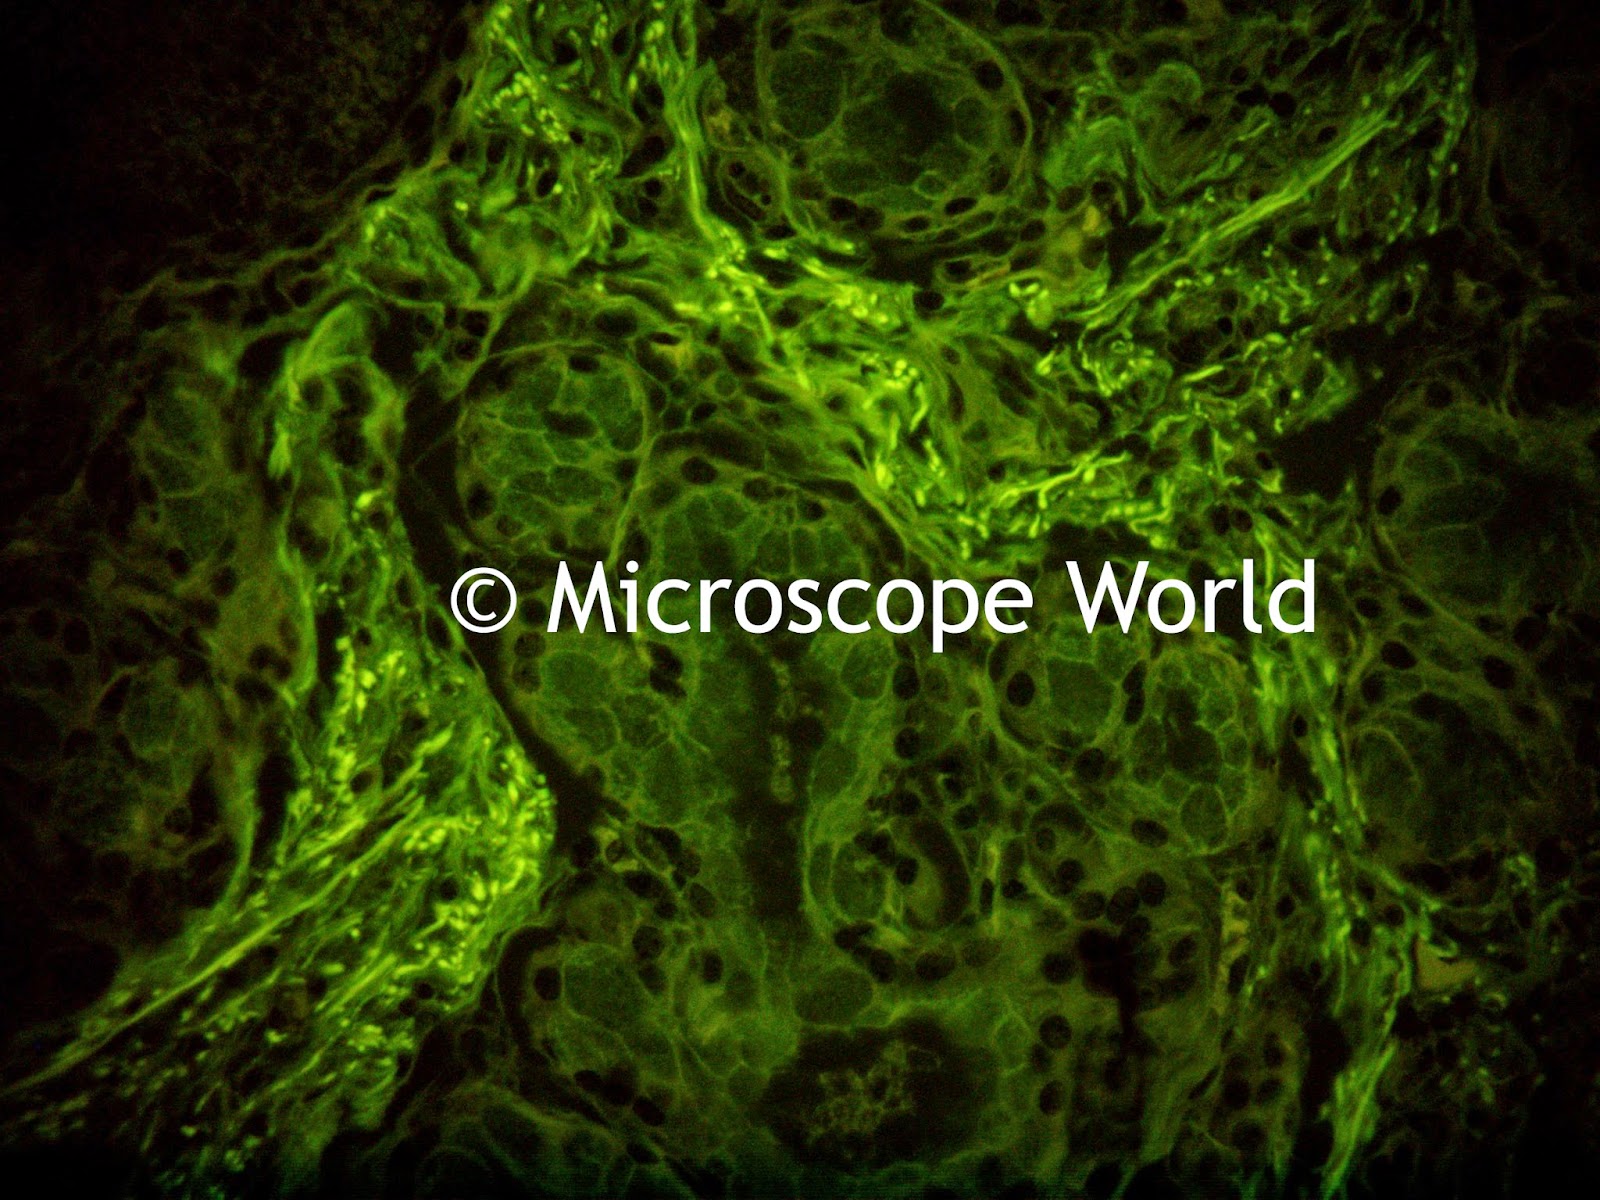 esophagus as seen with fluorescence microscopy 400x